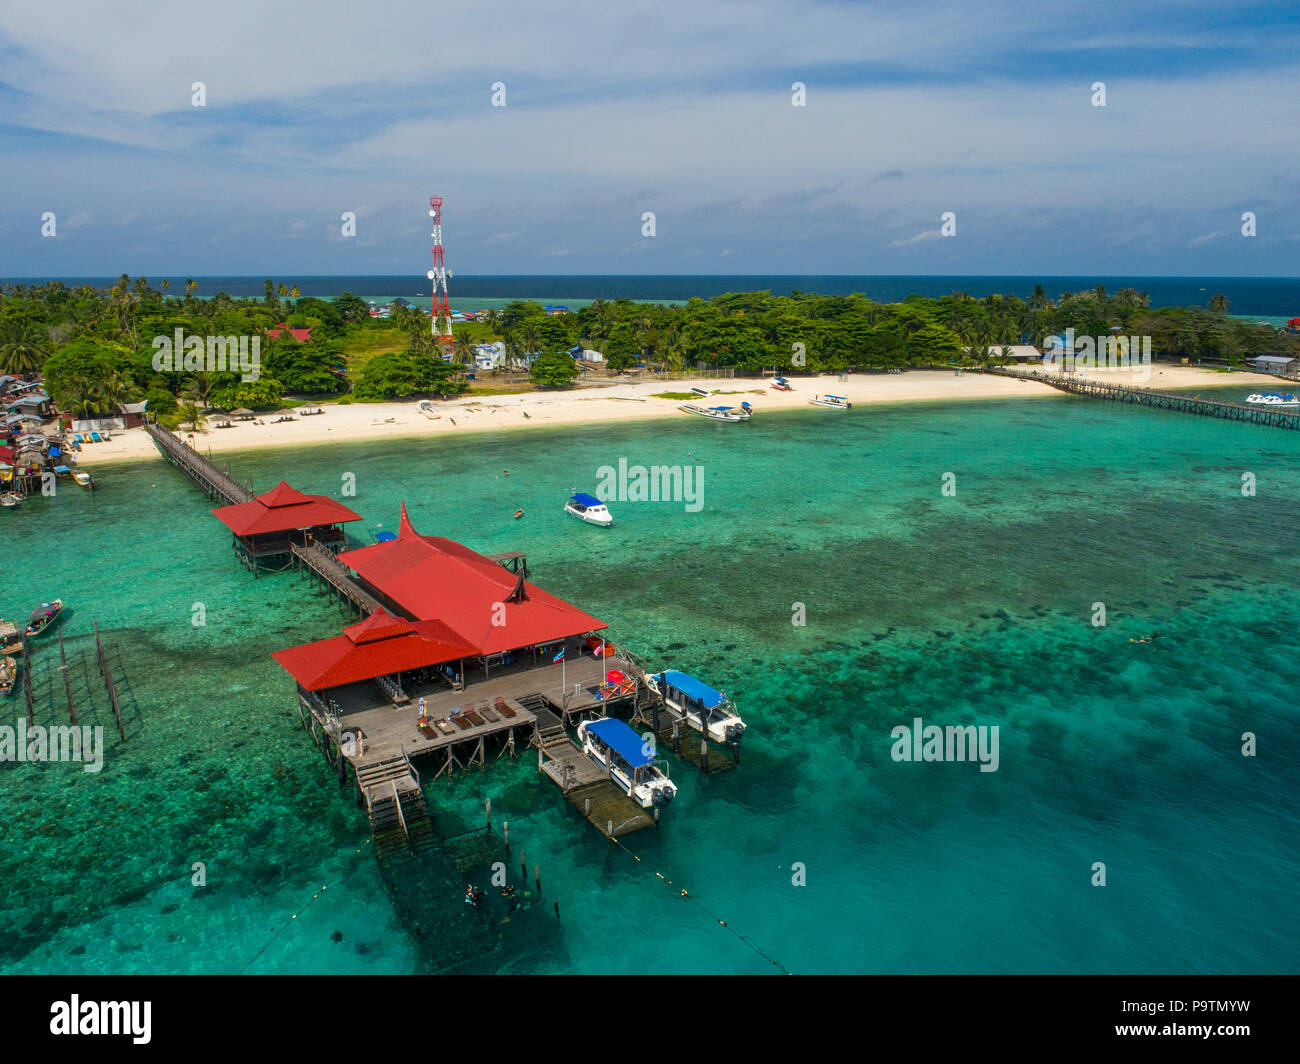 A drone photo of Scuba Junkie Mabul Beach Resort jetty, dive center, boats, coral reef, island and beach, at Mabul Island, Sabah, Malaysia (Borneo). Stock Photo